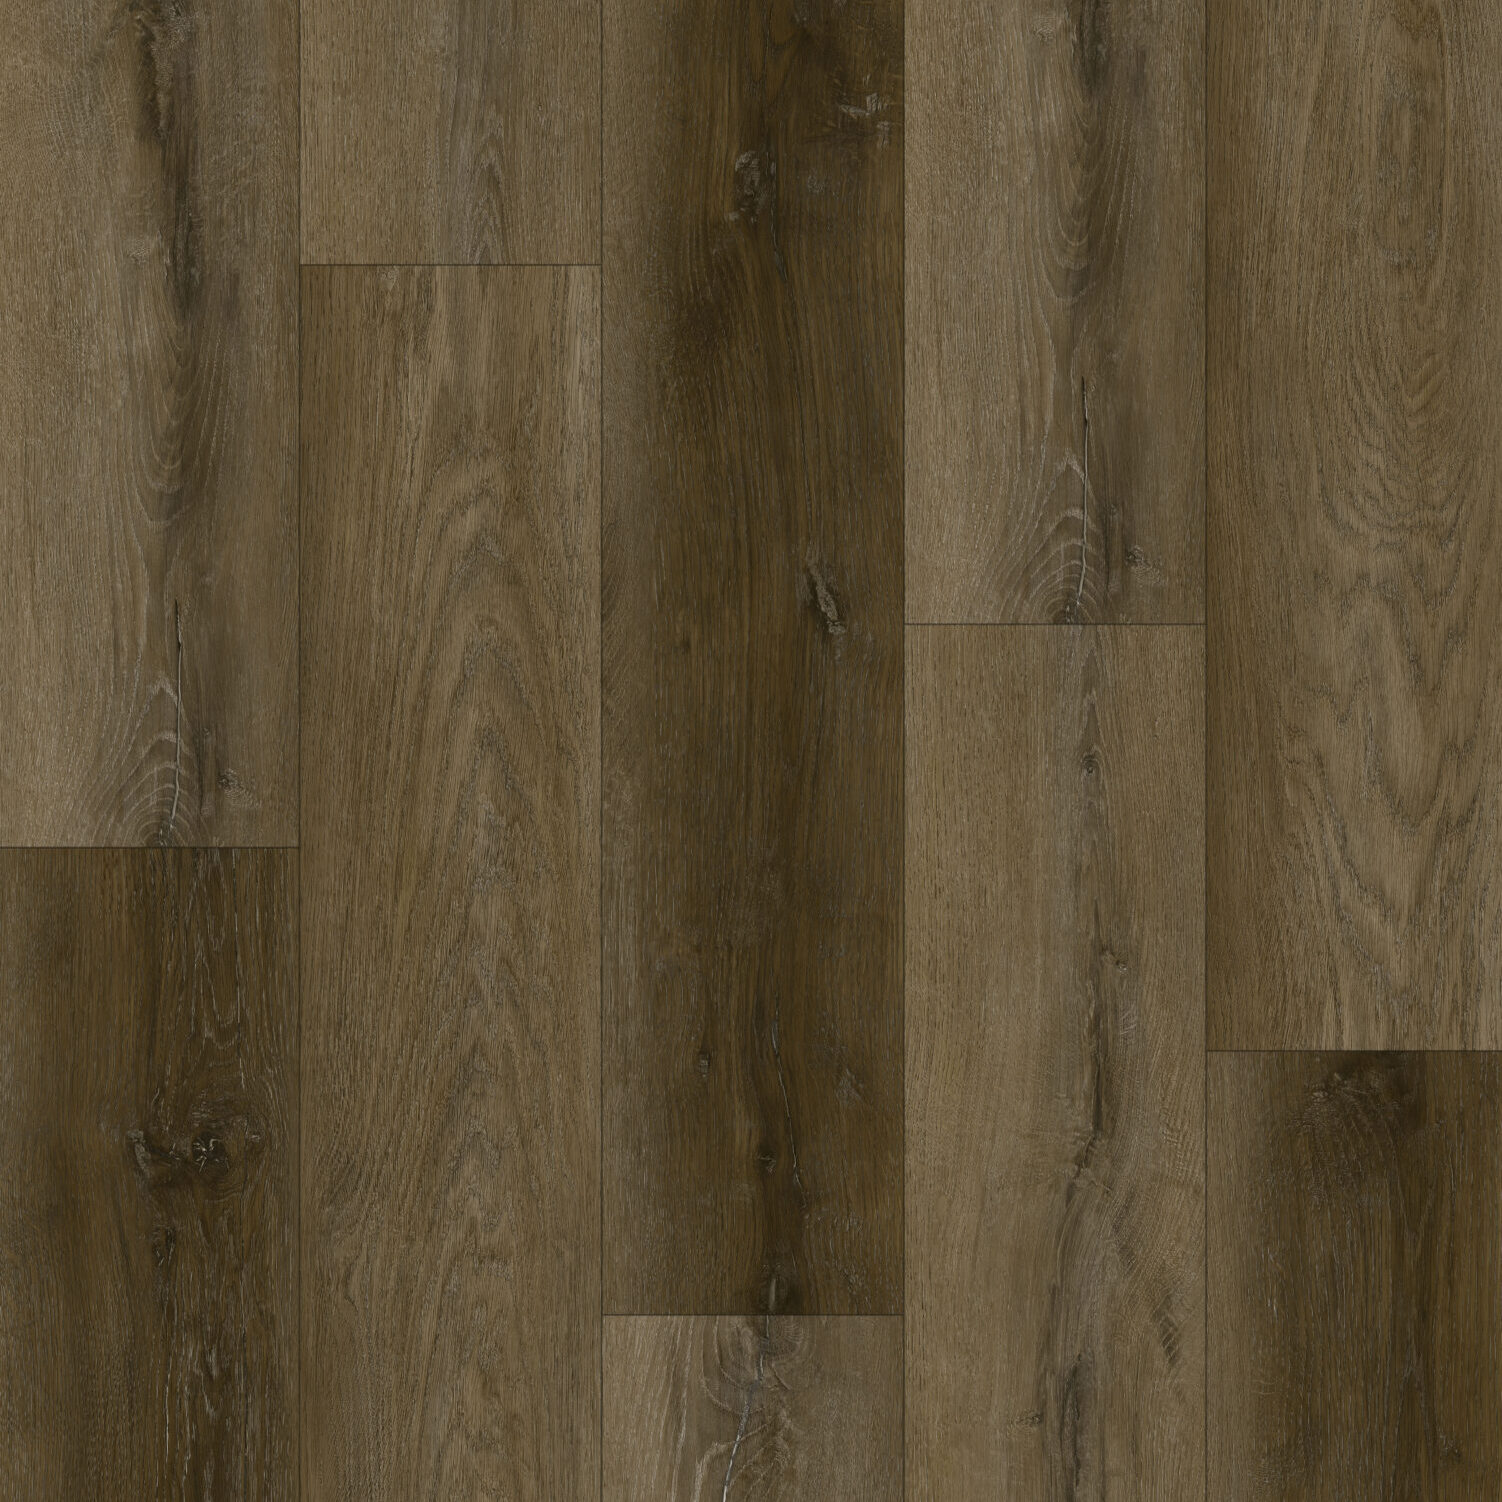 A brown Millennium flooring